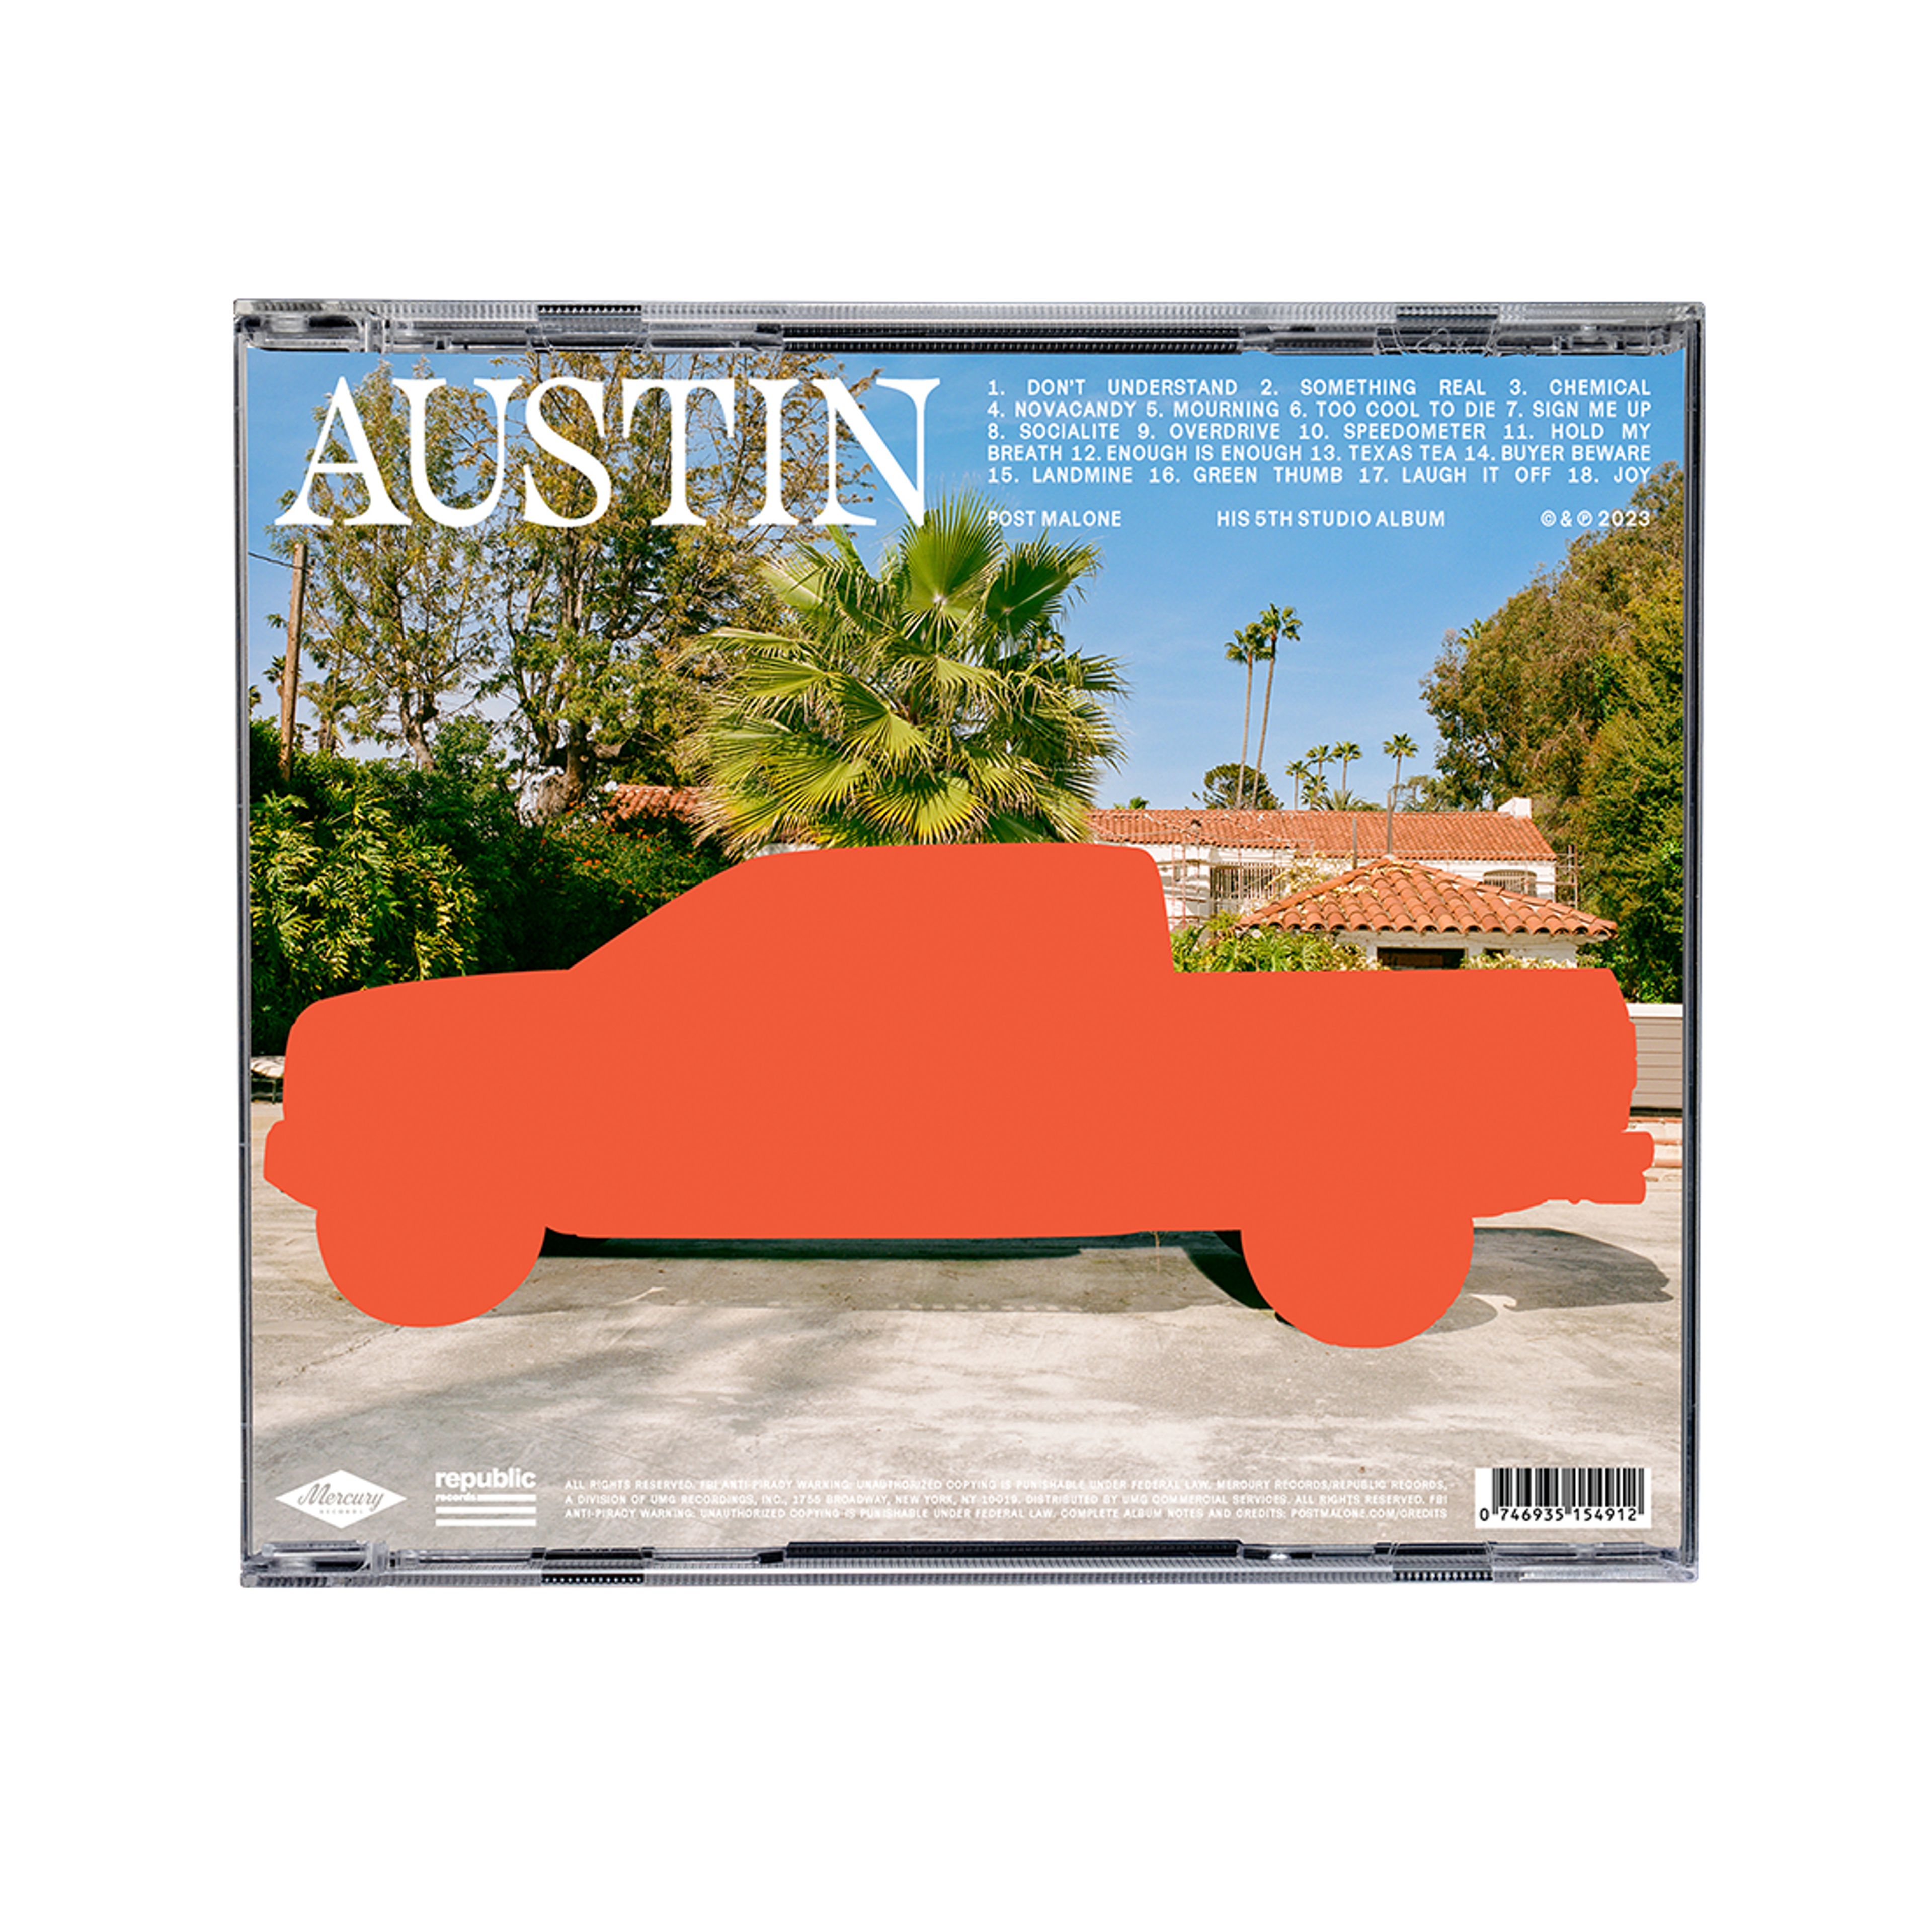 Alternate View 1 of Austin (Alt. Tour Version 3)